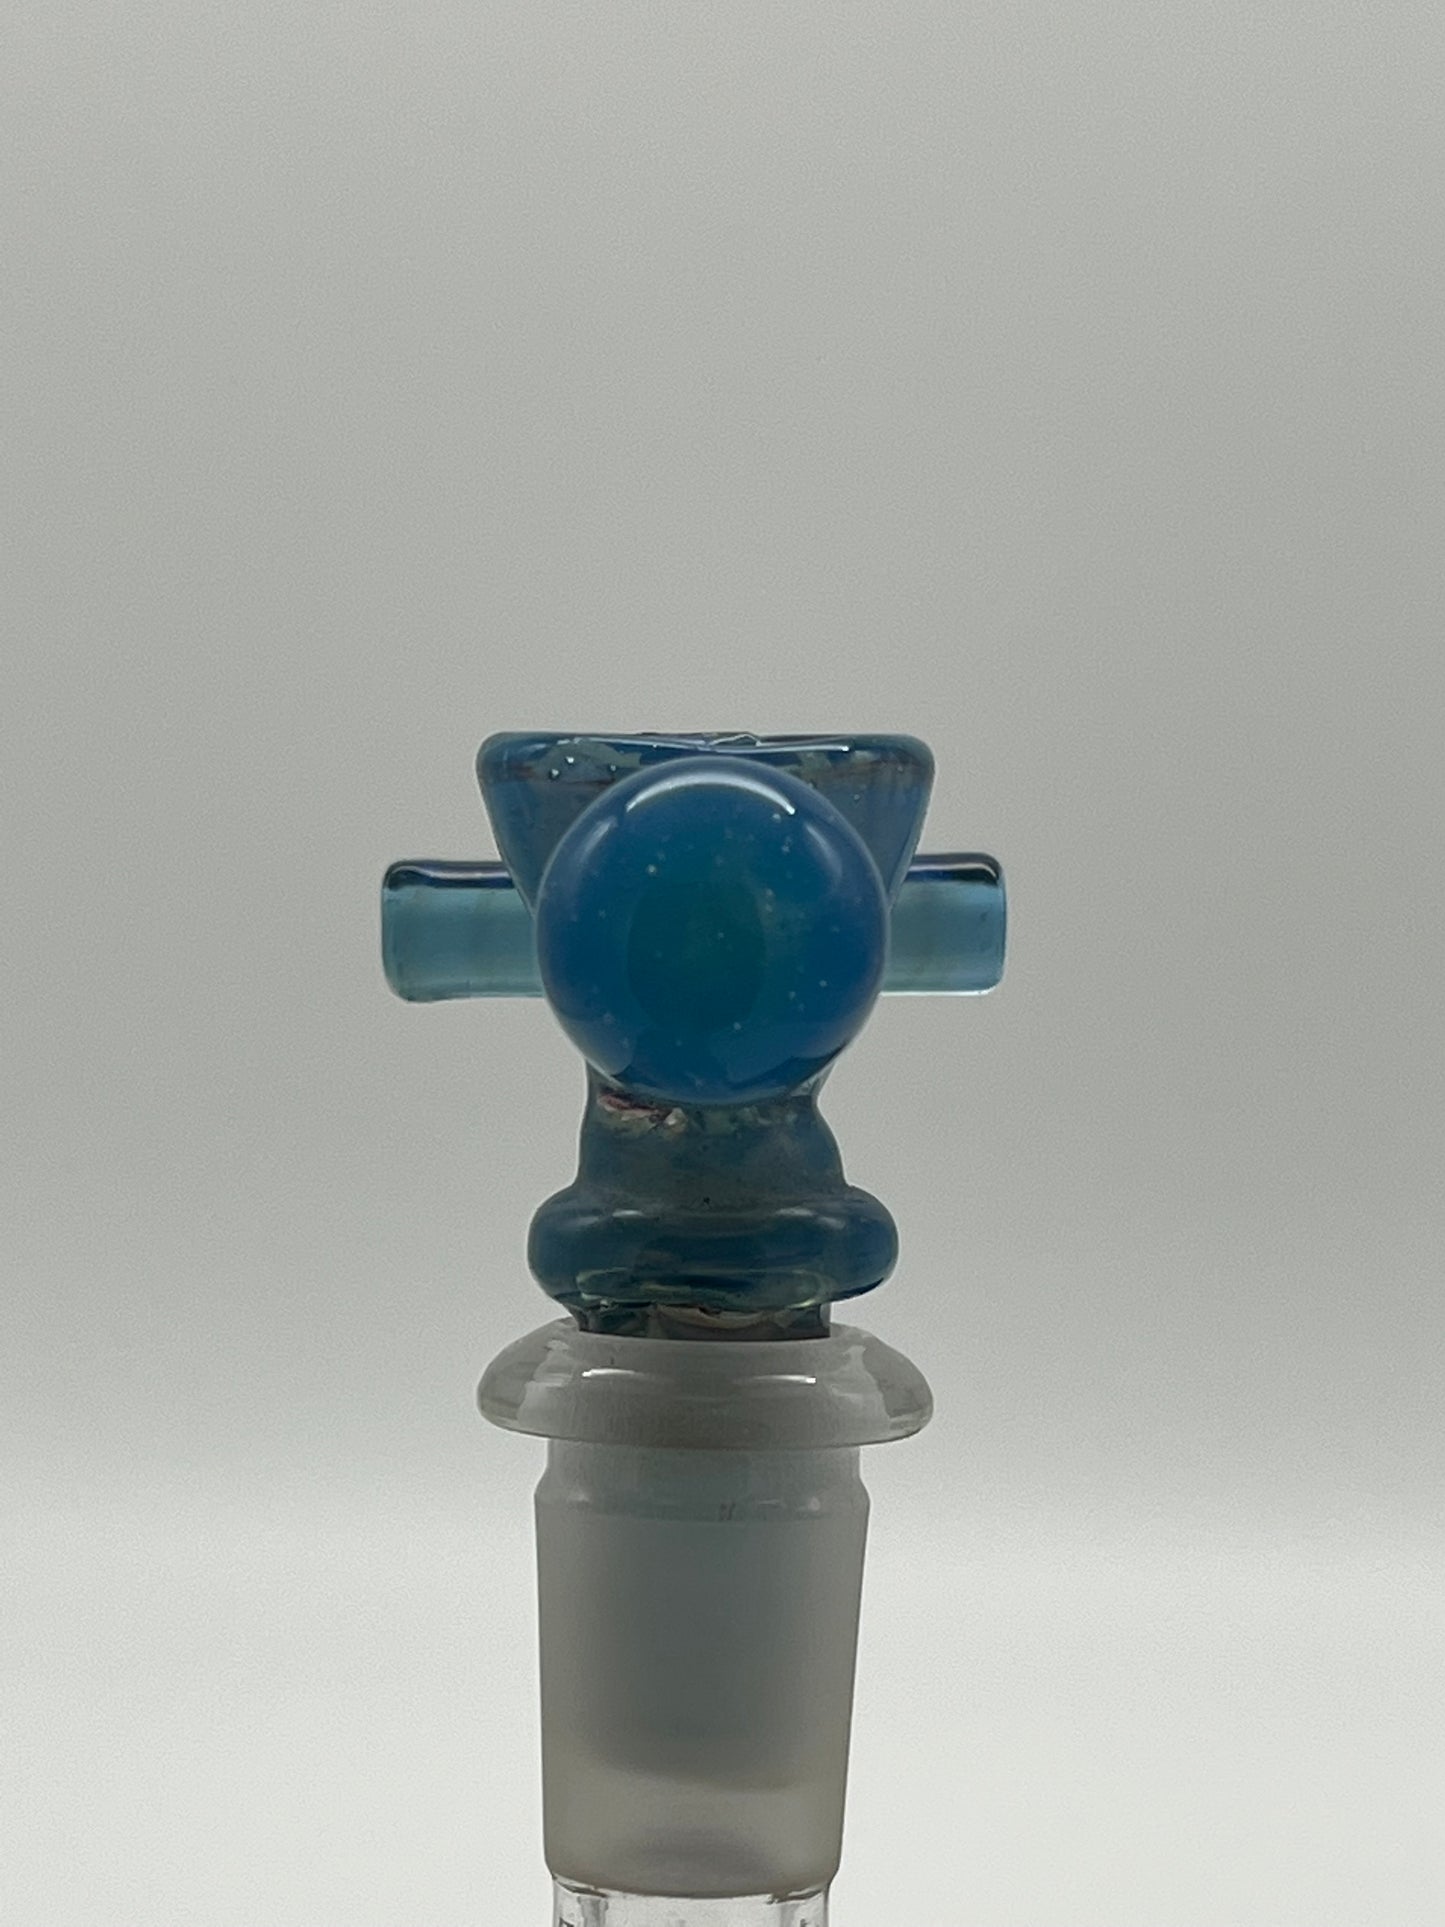 Marina Opalescent Blue 14mm 4 hole screen Bowl / Slide